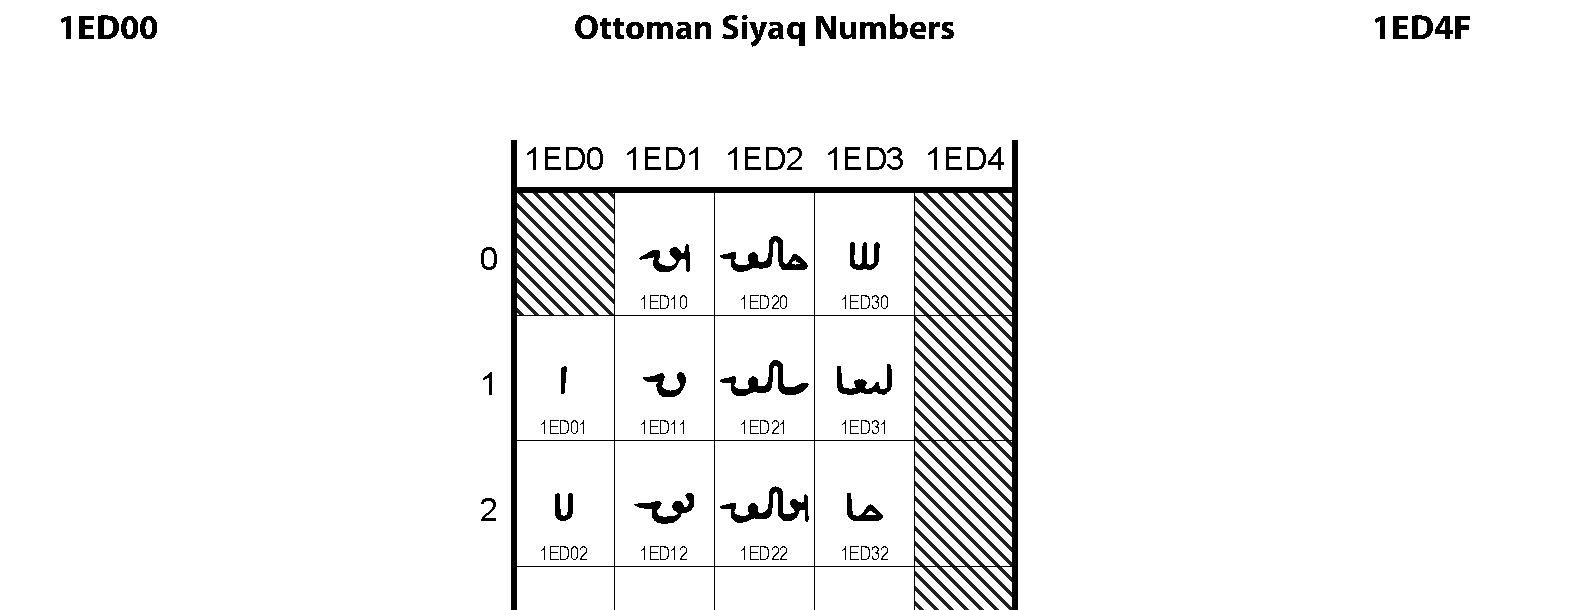 Unicode - Ottoman Siyaq Numbers